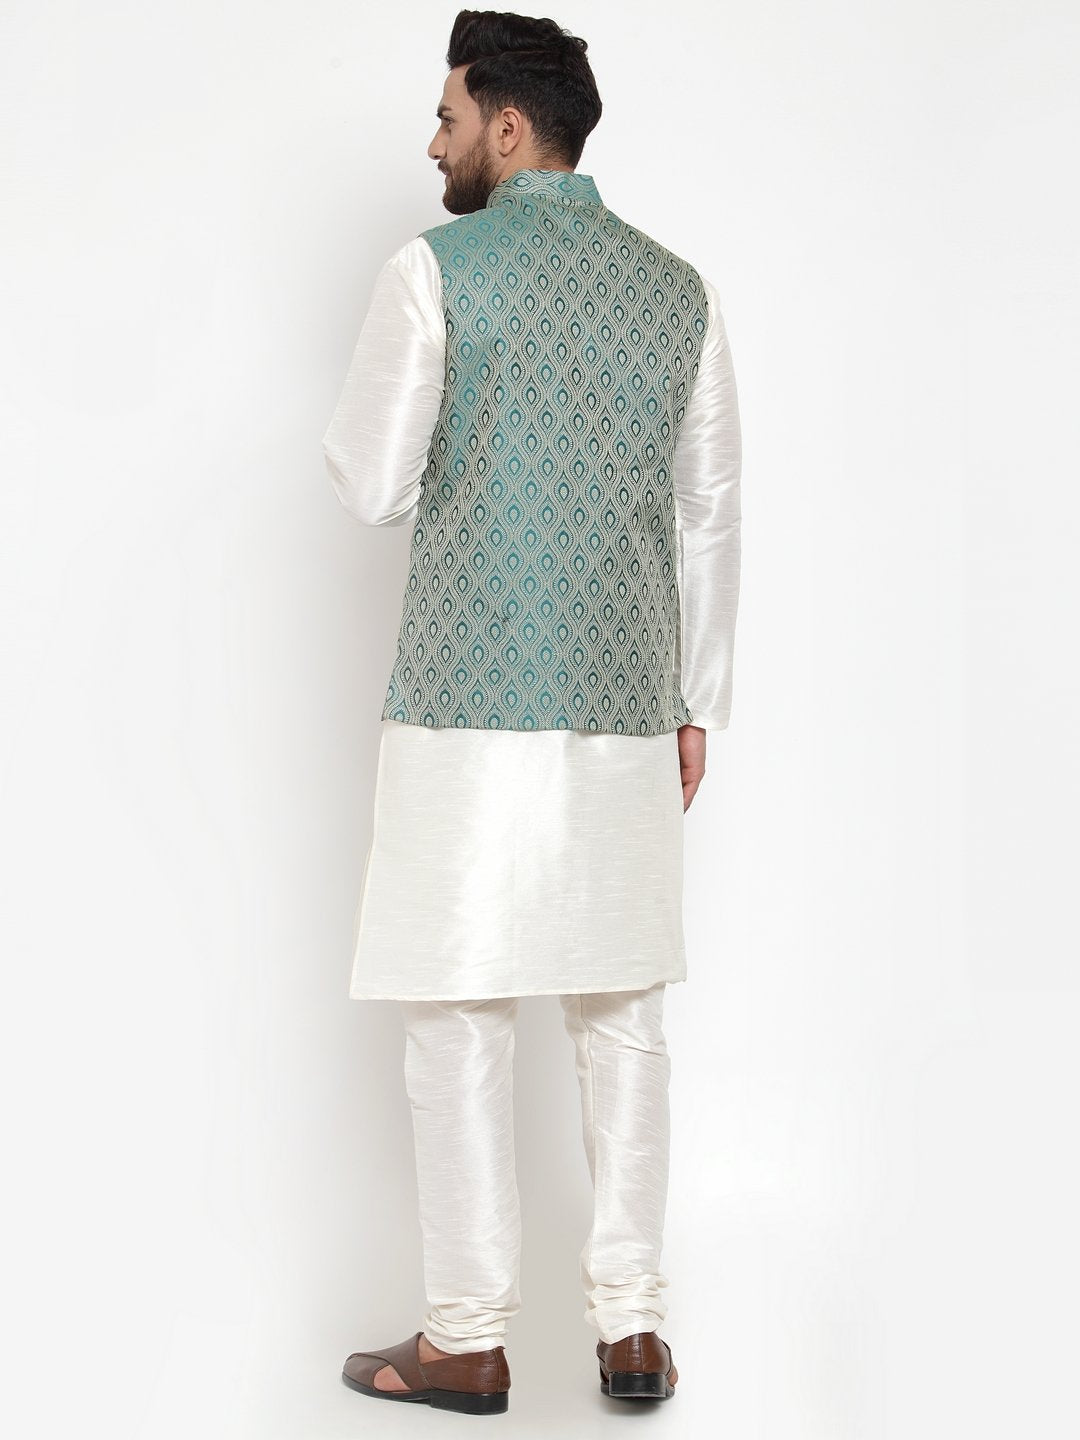 Men's Off White Solid Kurta with Churidar & Green Jacquard Nehru Jacket - Virat Fashions